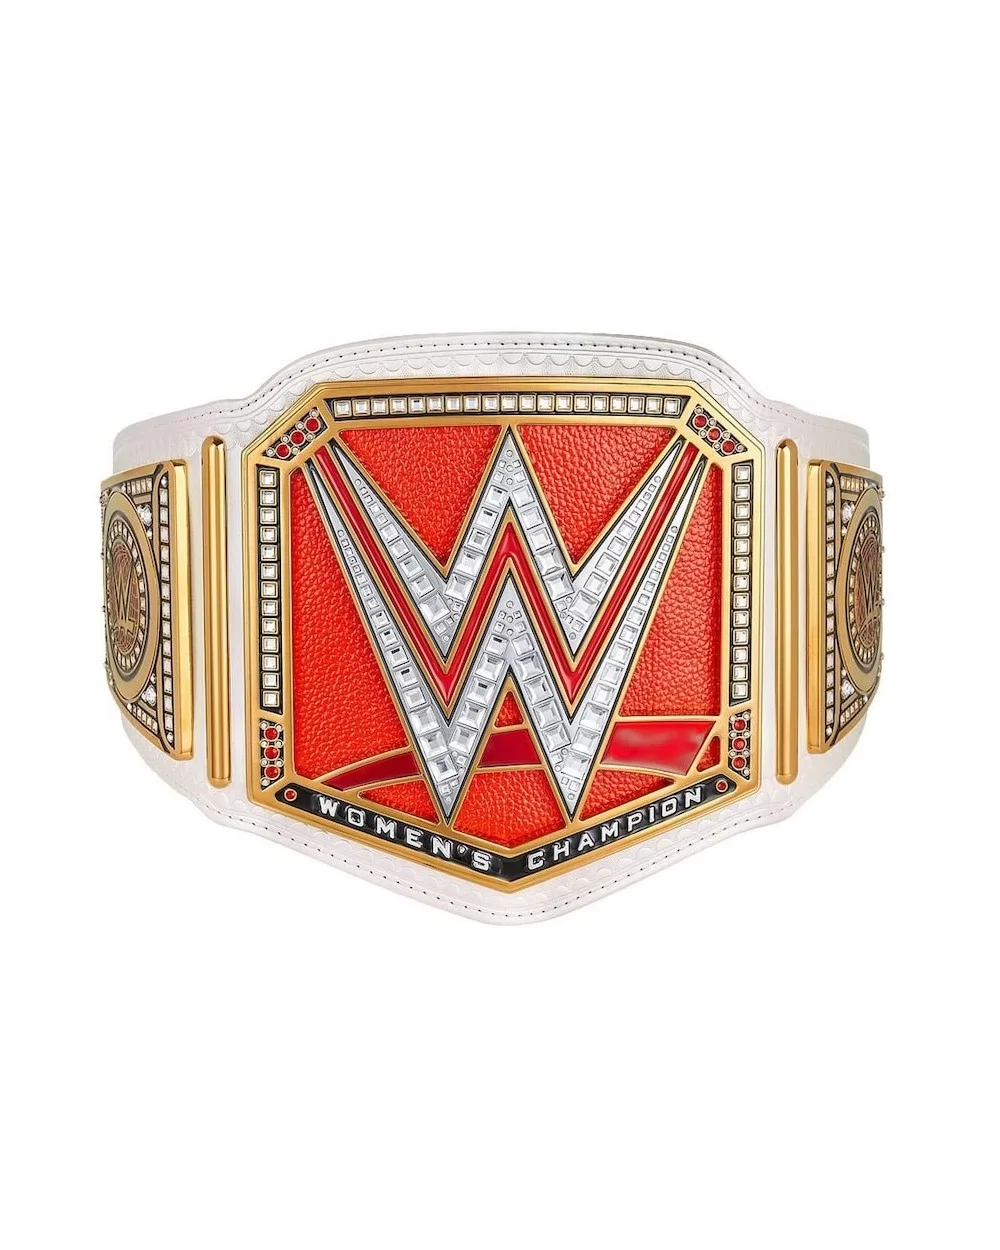 WWE RAW Women's Championship Kids Replica Title Belt $78.00 Collectibles